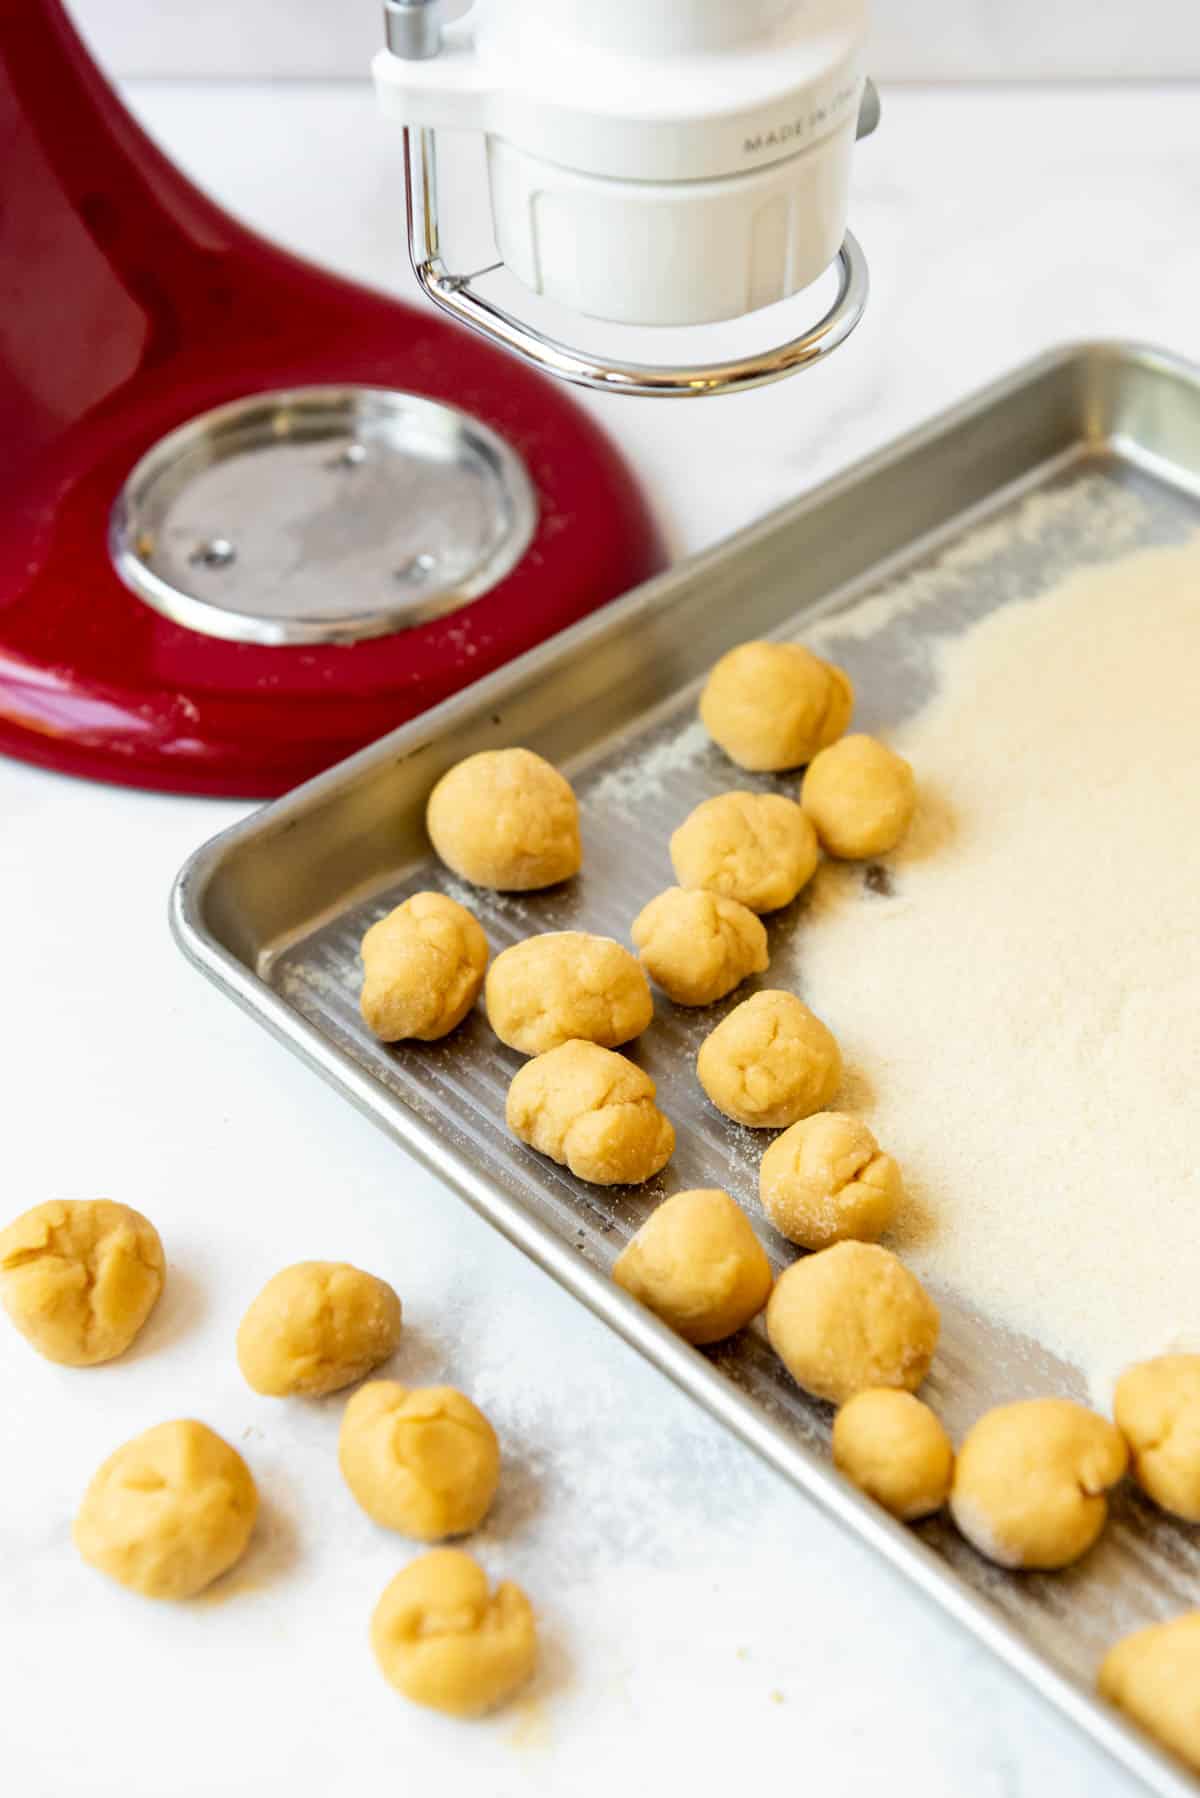 Walnut sized balls of pasta dough next to semolina flour.